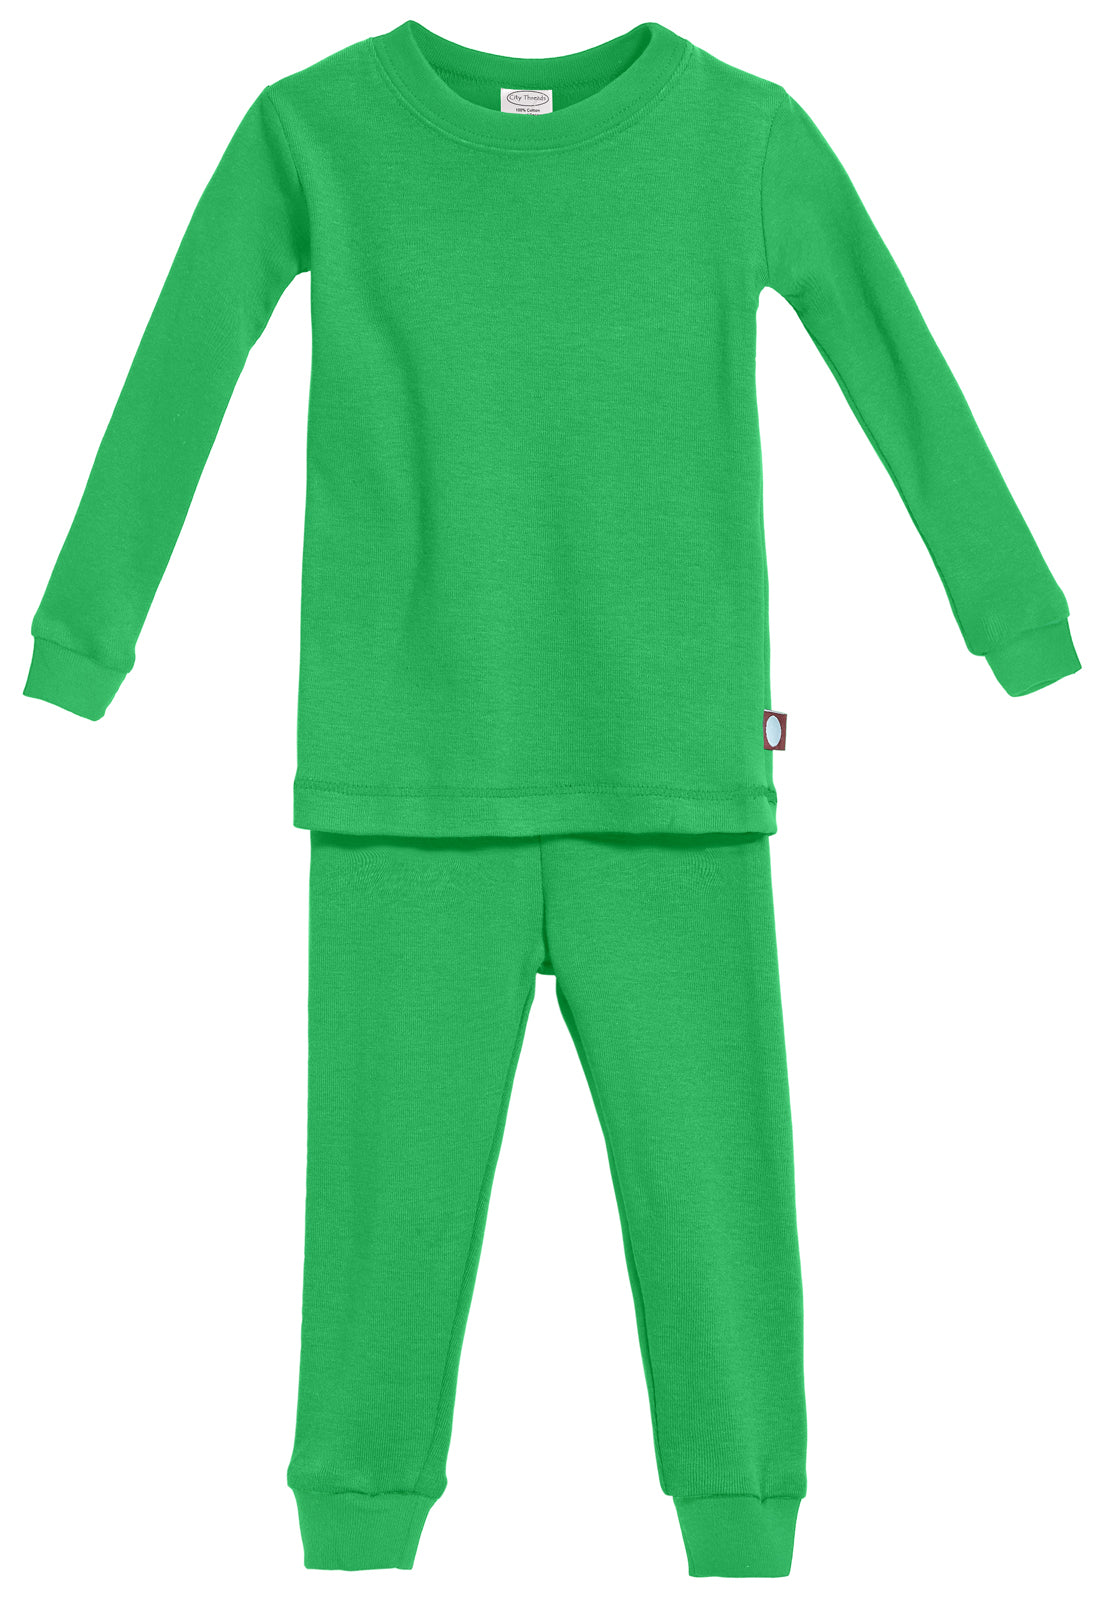 Boys and Girls Soft Organic Cotton Snug Fit Pajama Sets | Elf Green